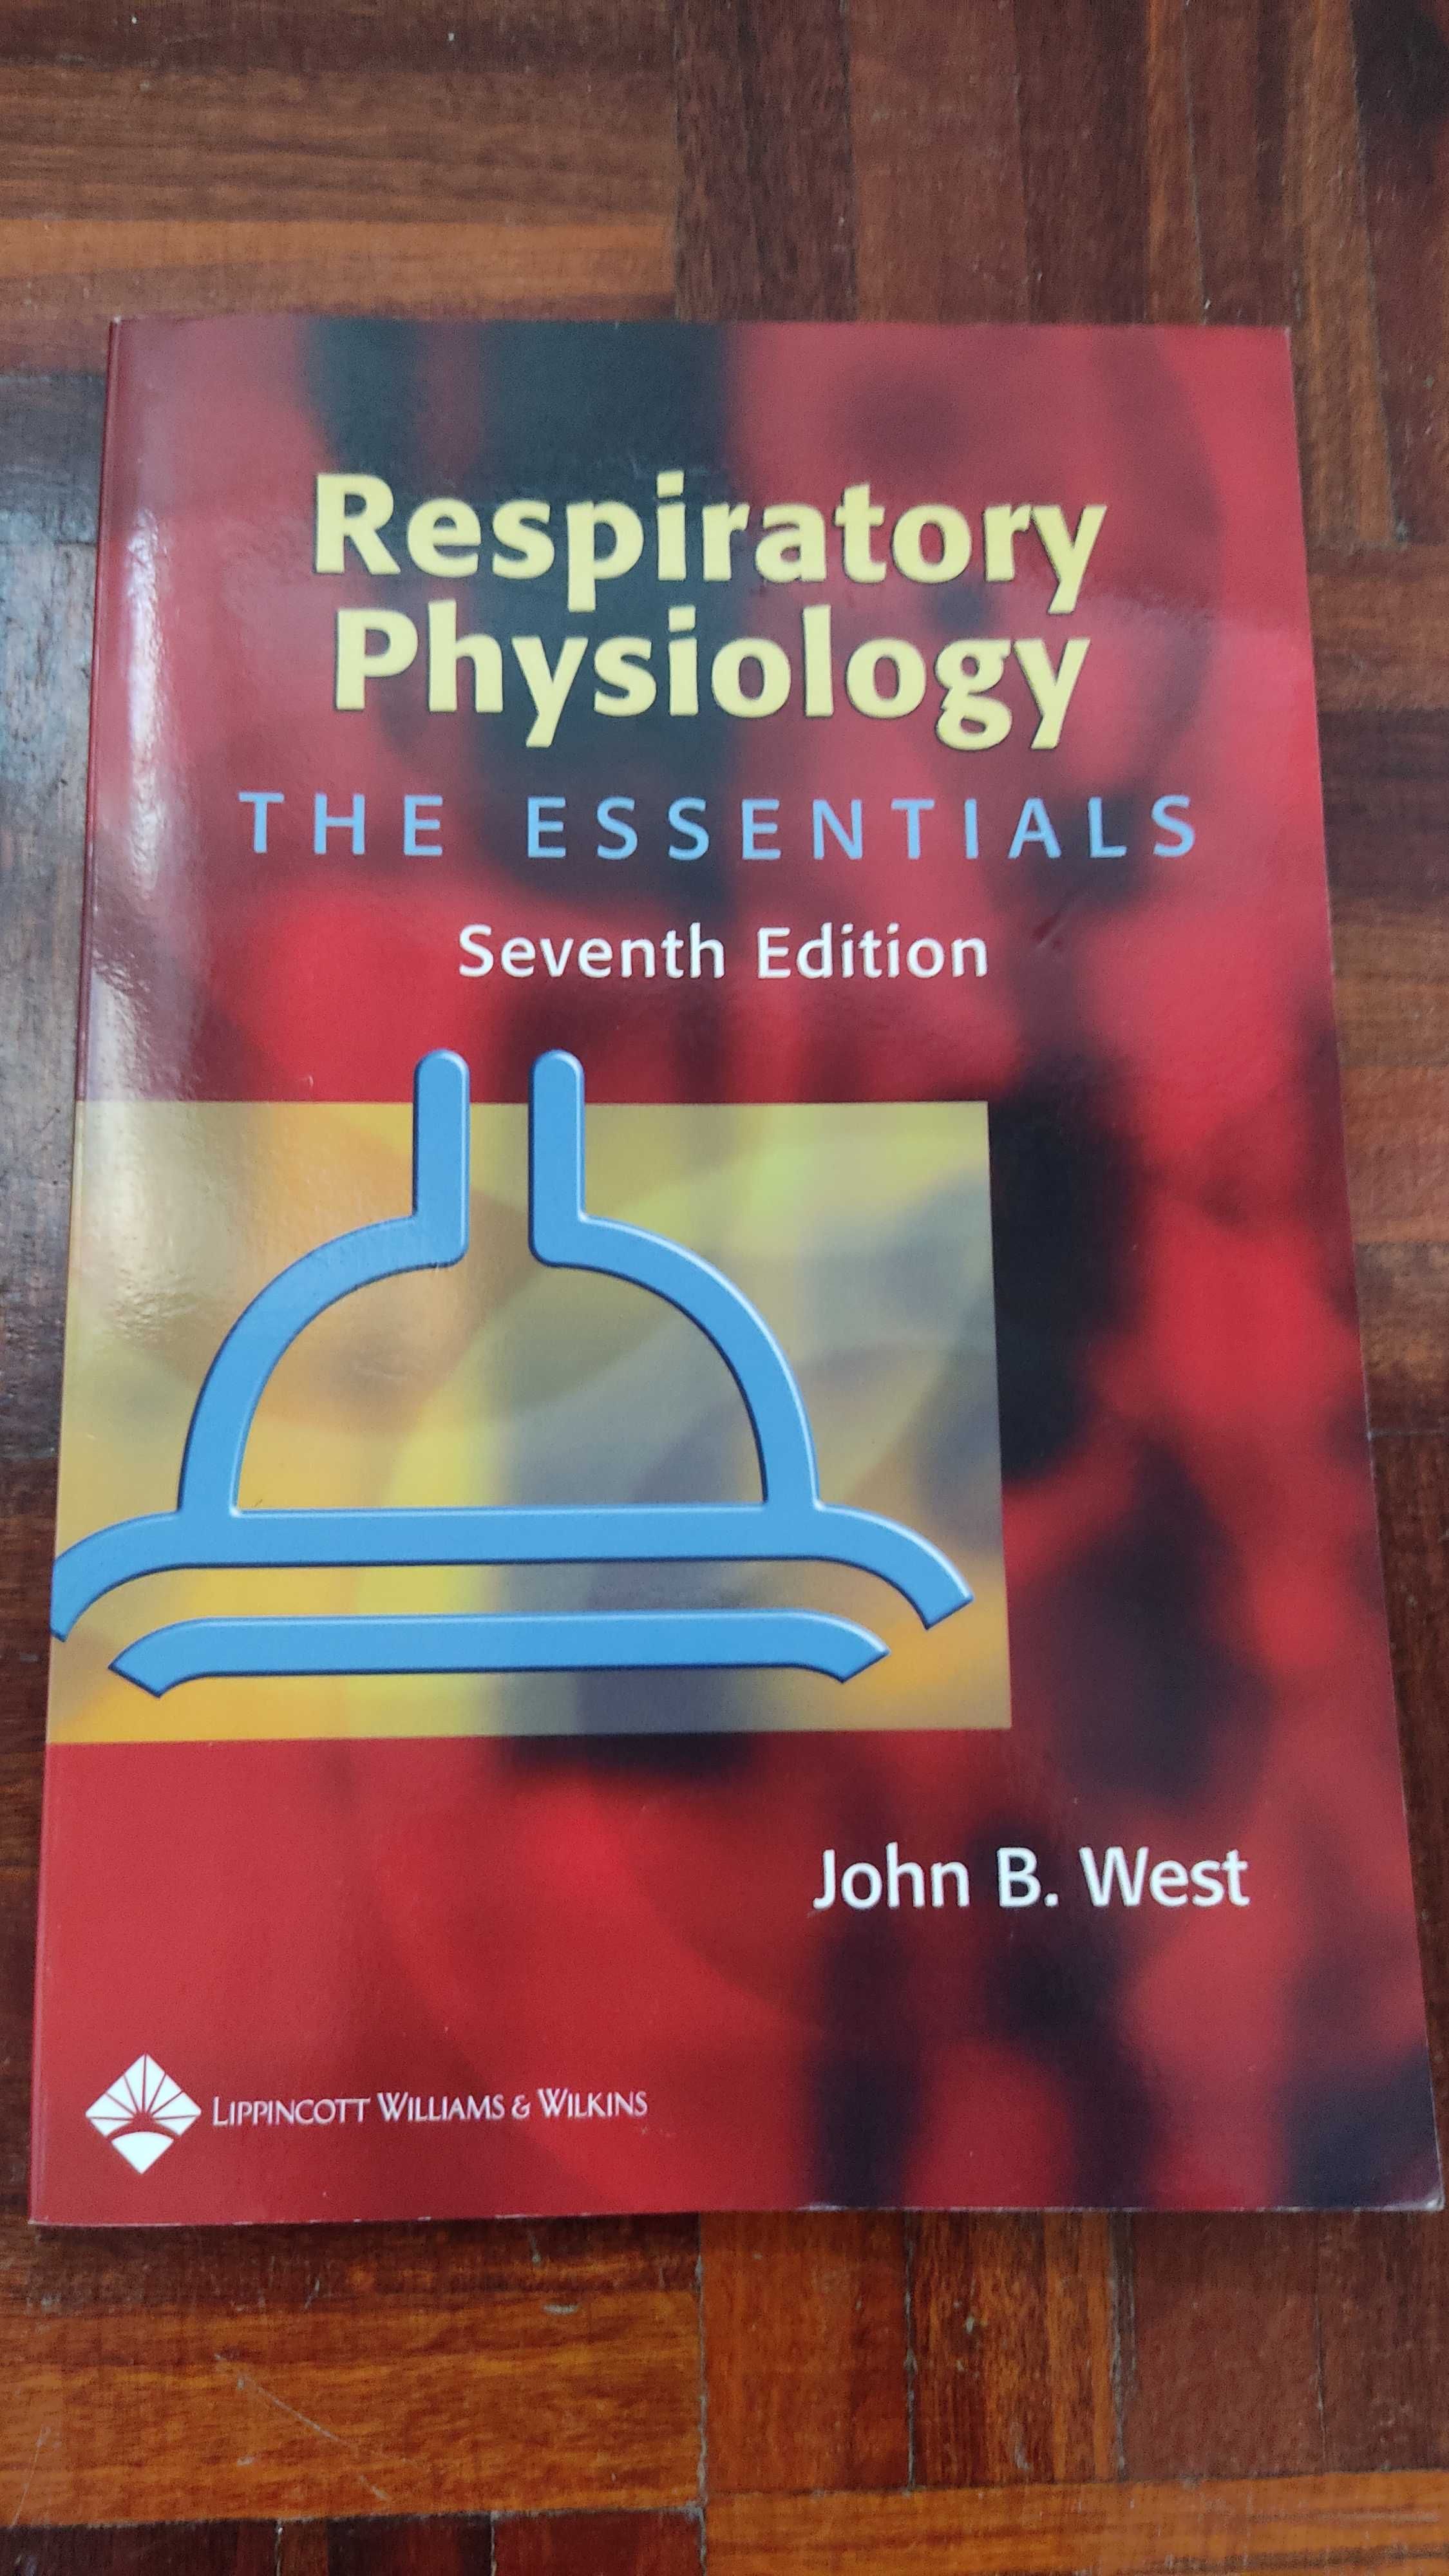 Livro "Respiratory Physiology"